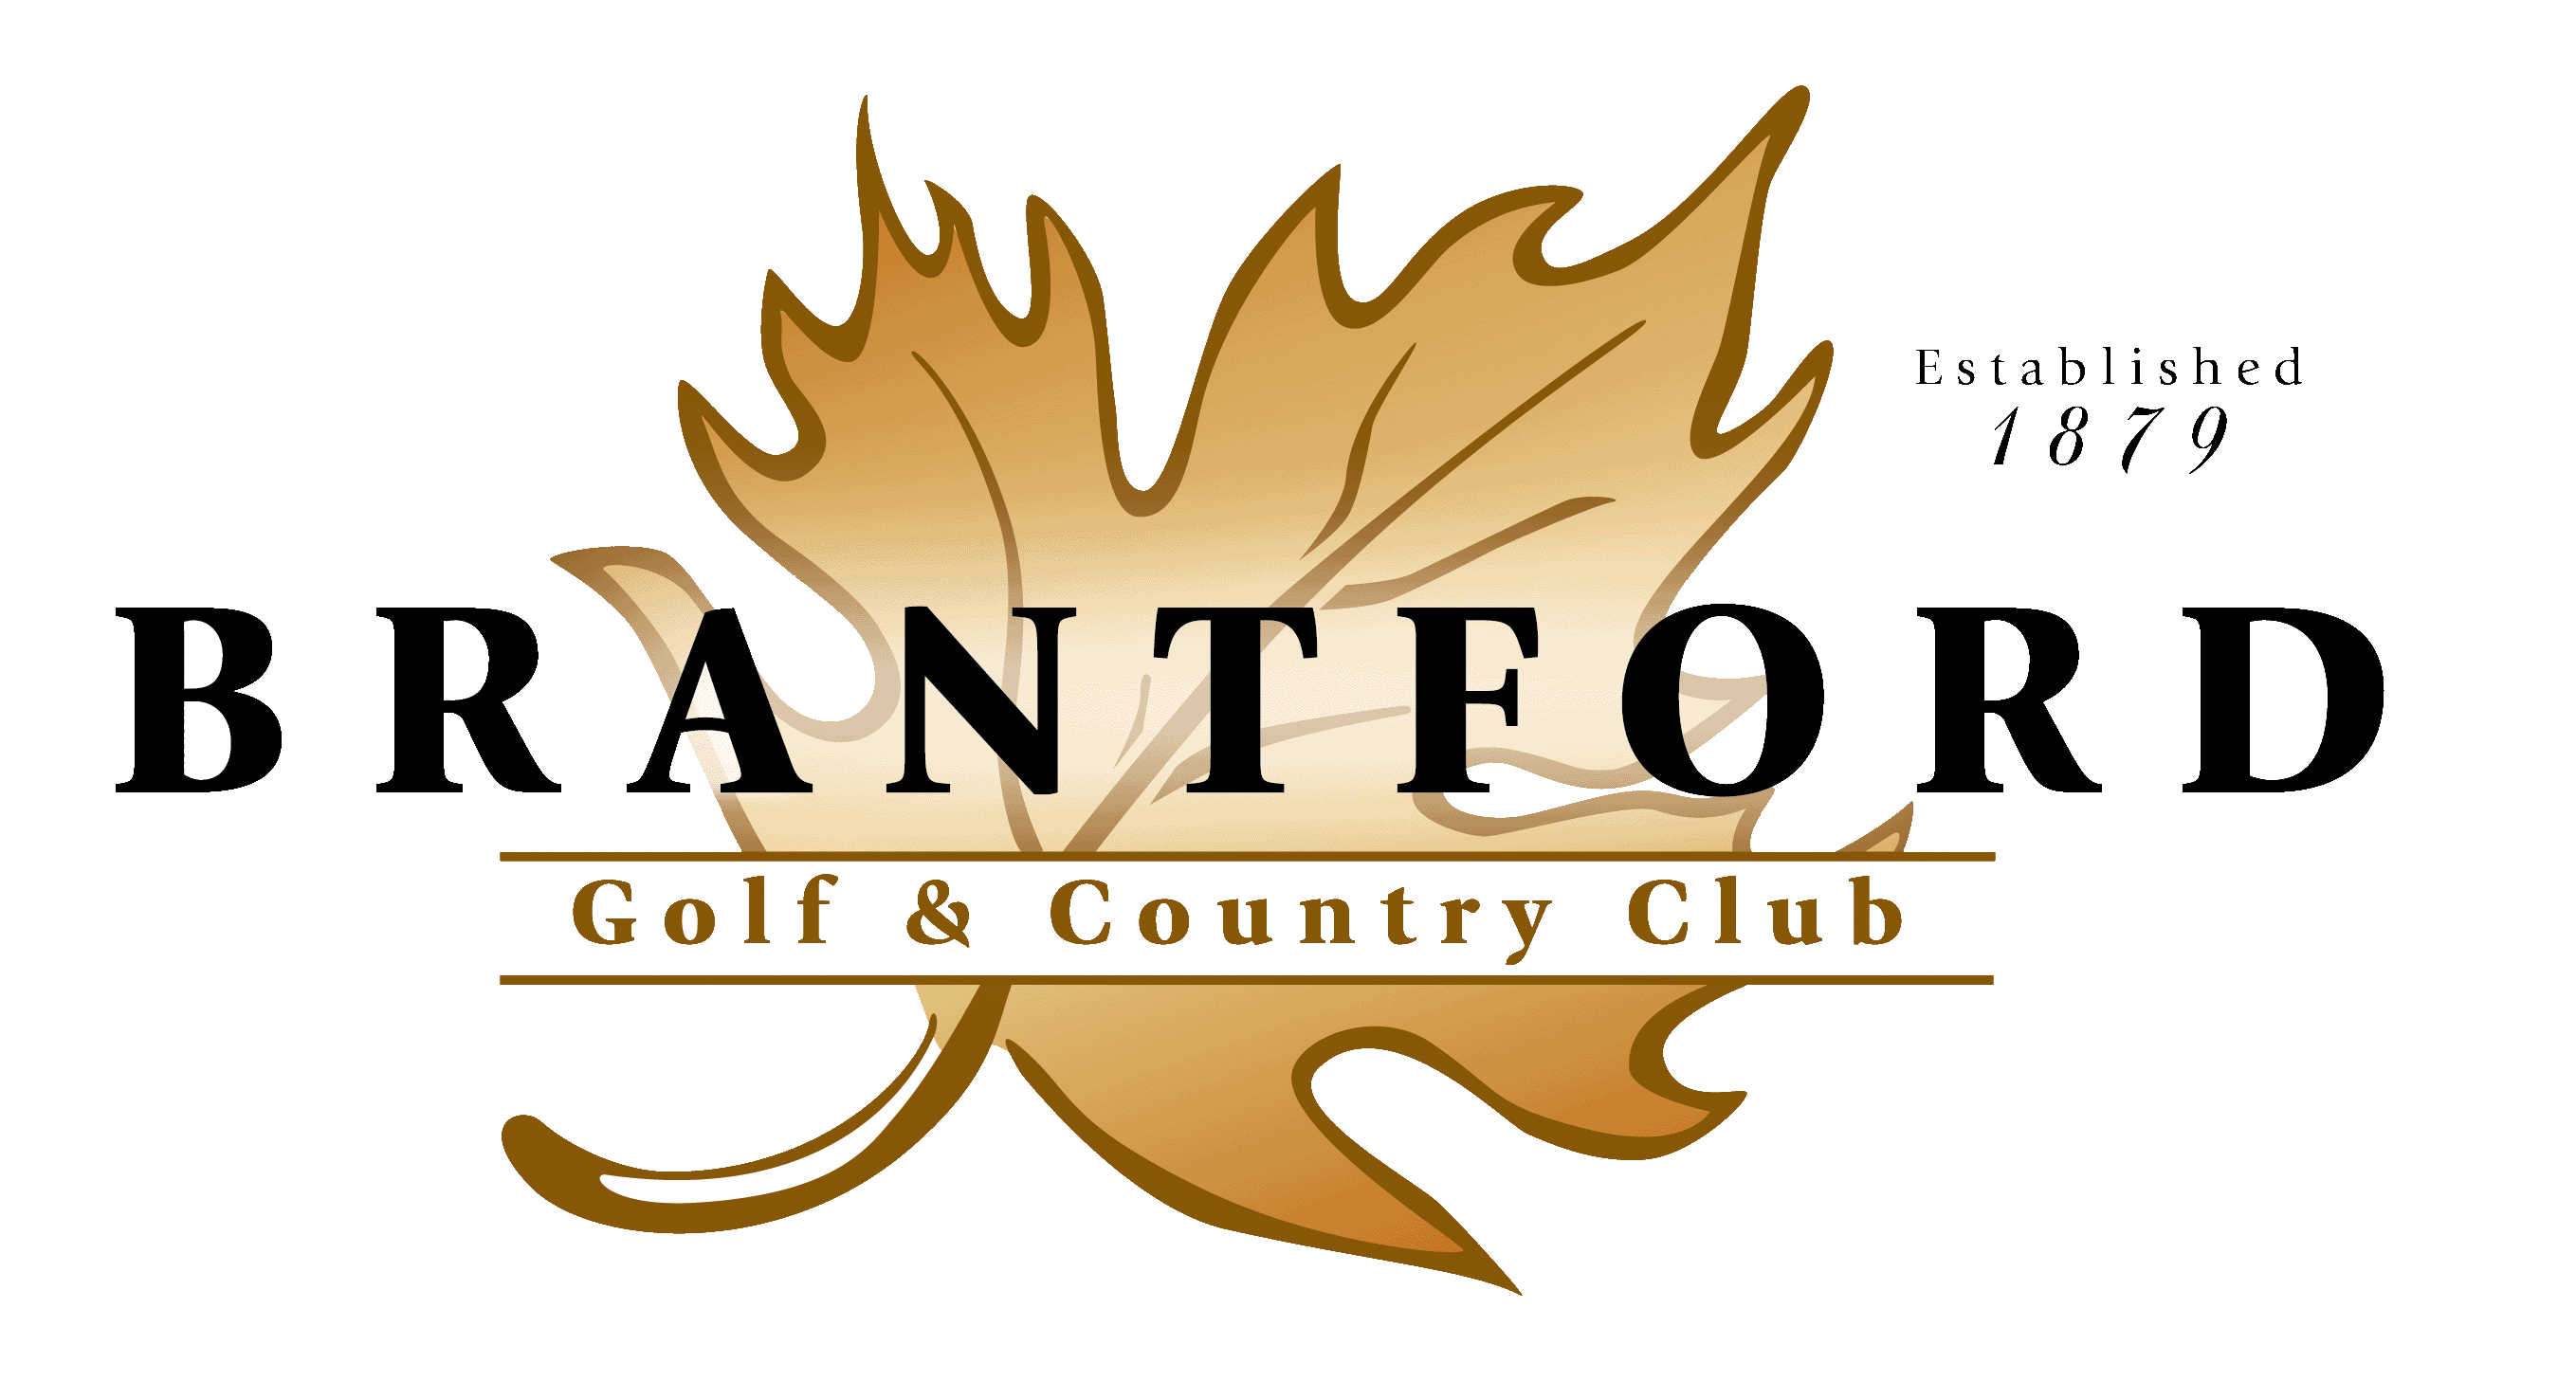 Brantford Golf and Country Club Ltd.